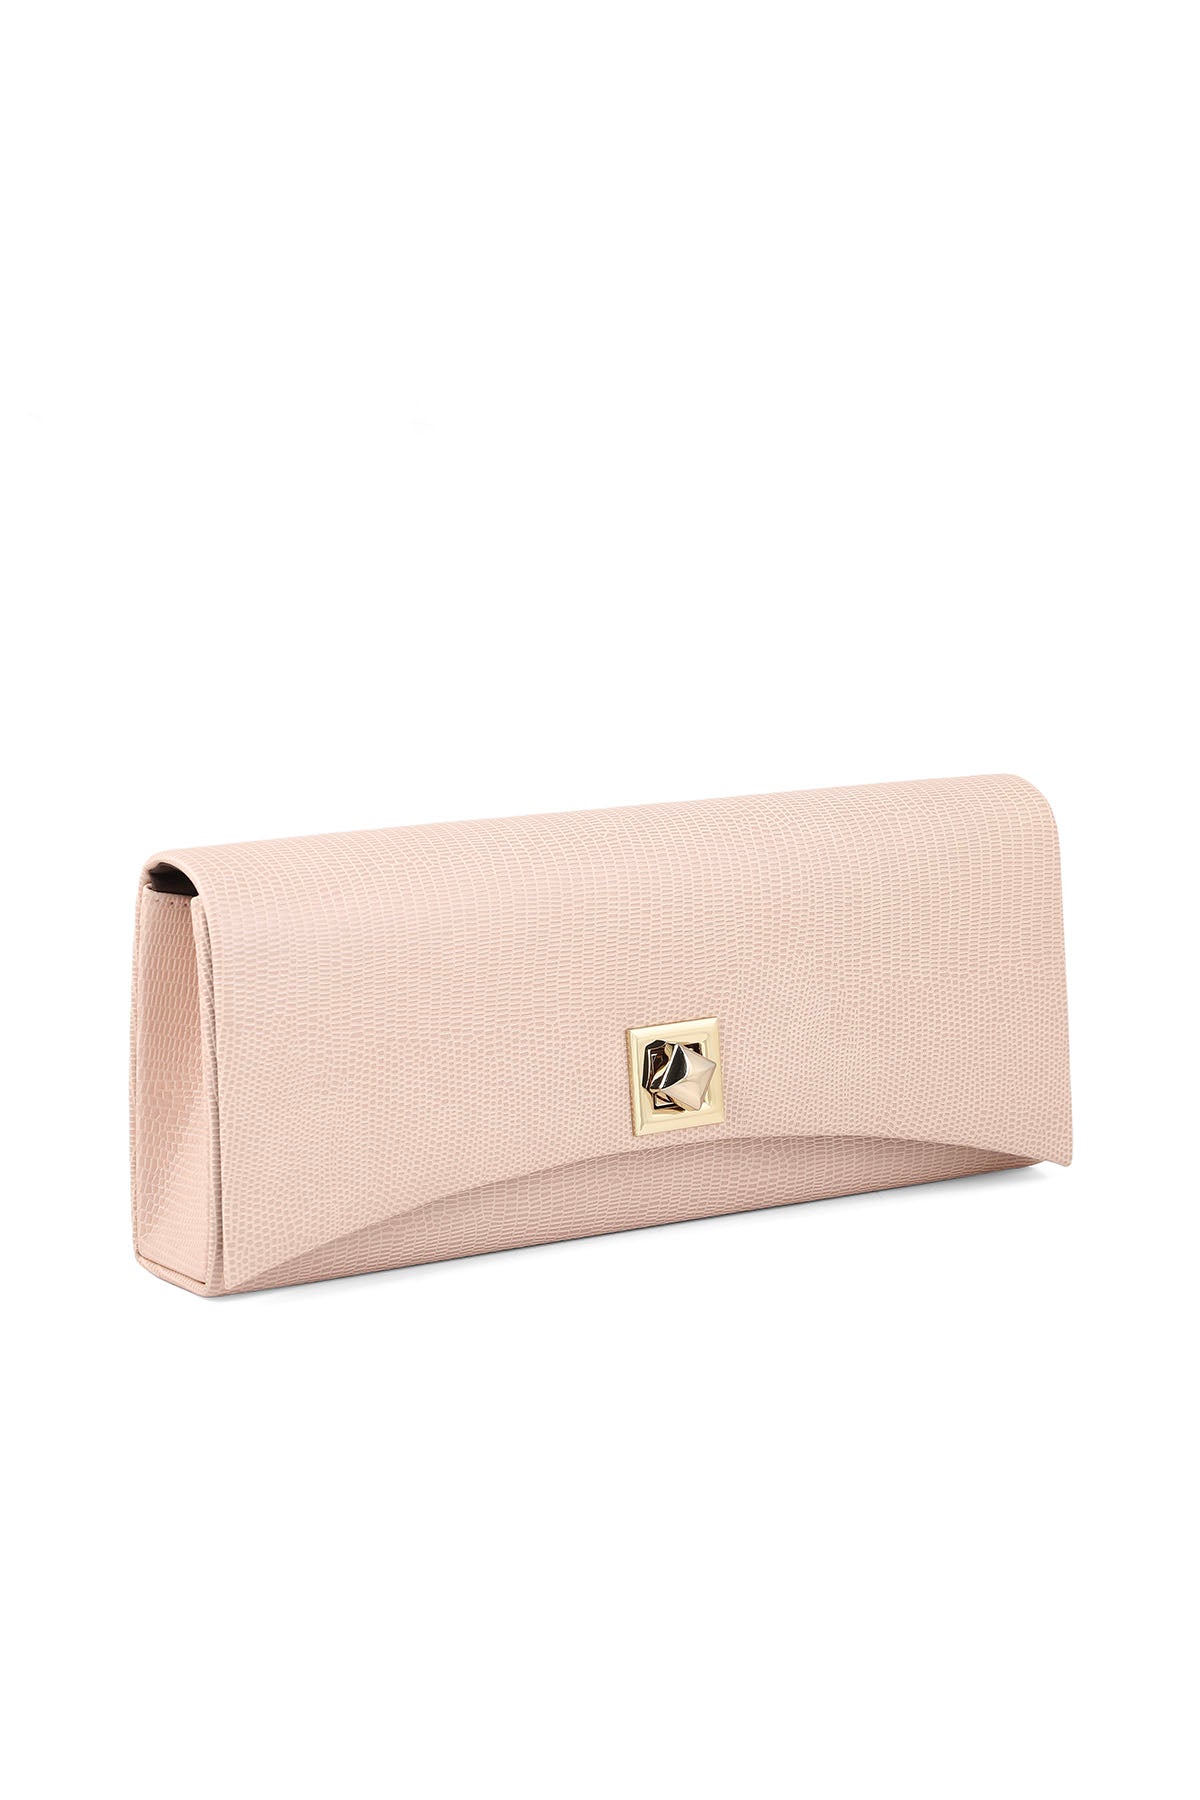 Flap Shoulder Bags B21551-Pink